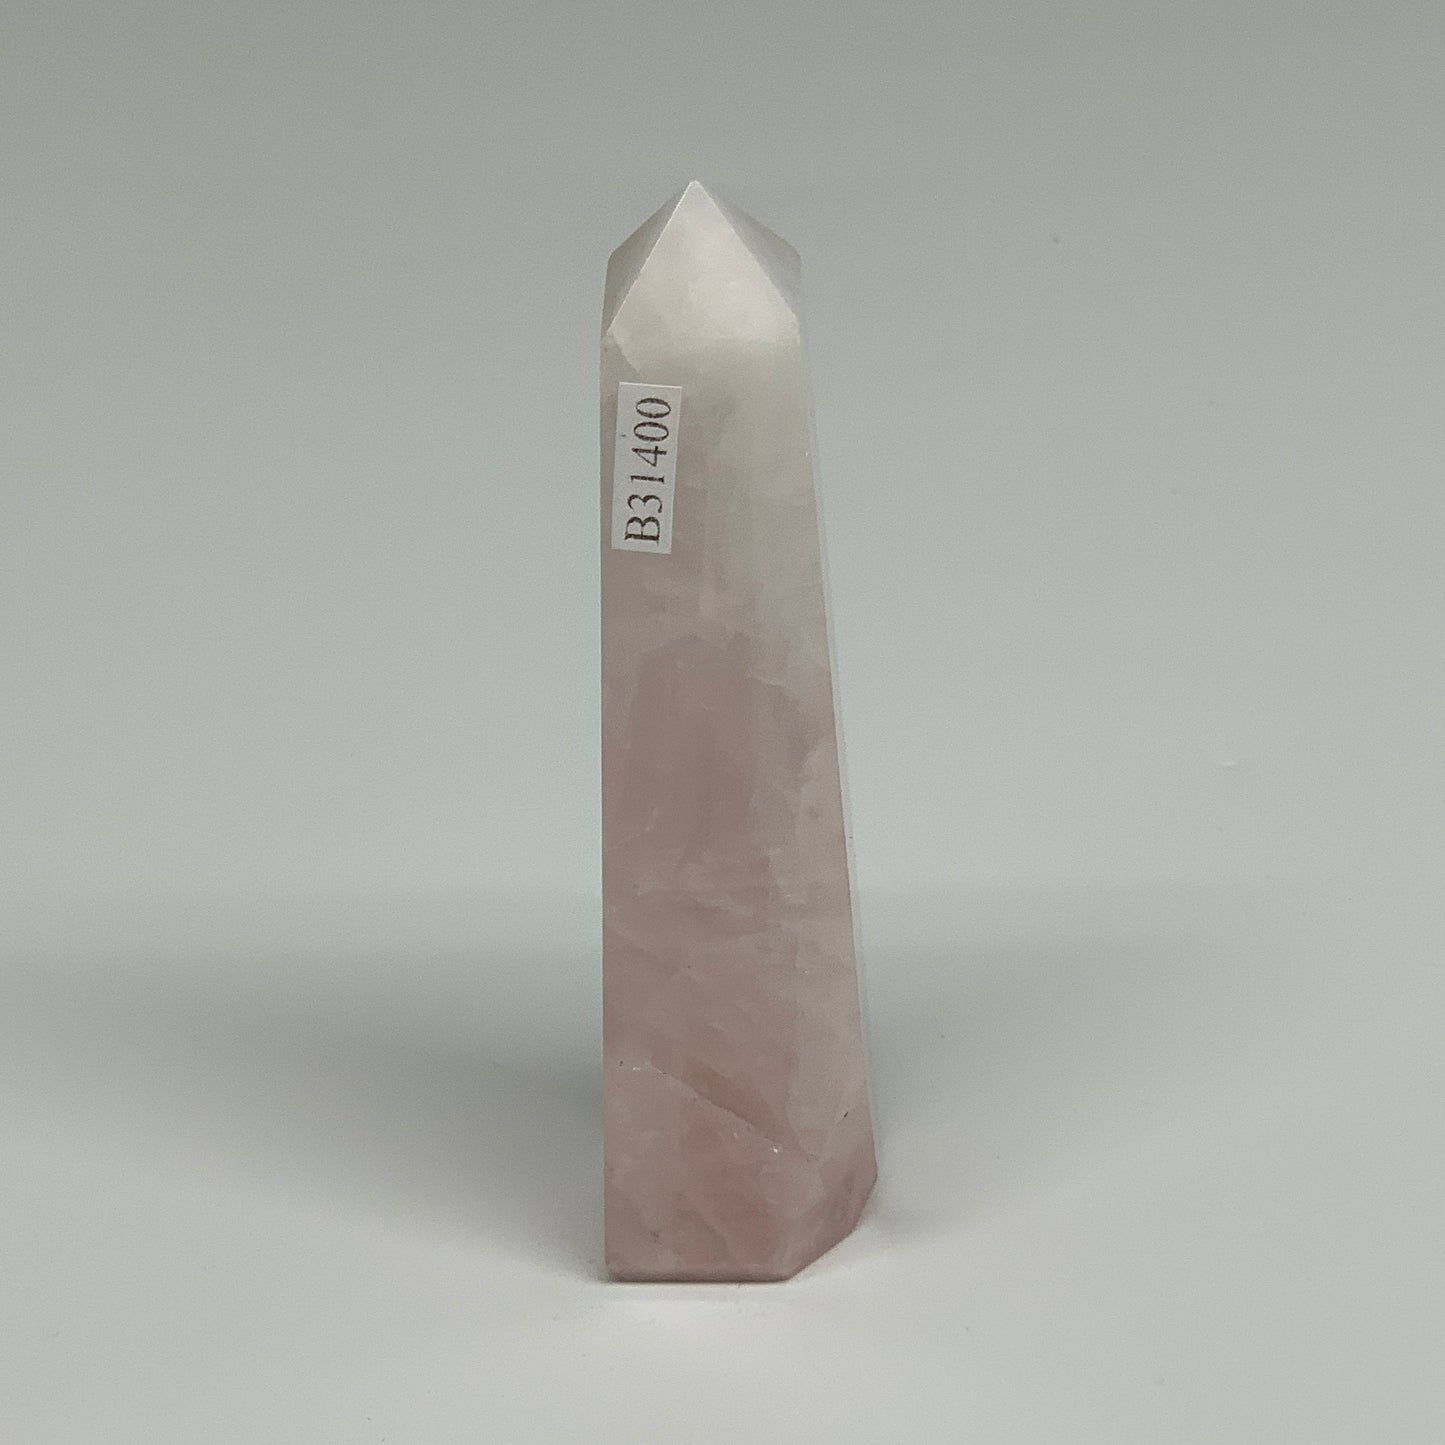 86.6g,3.7"x0.9"x0.9" Rose Quartz Tower Obelisk Point Crystal @Brazil, B31400